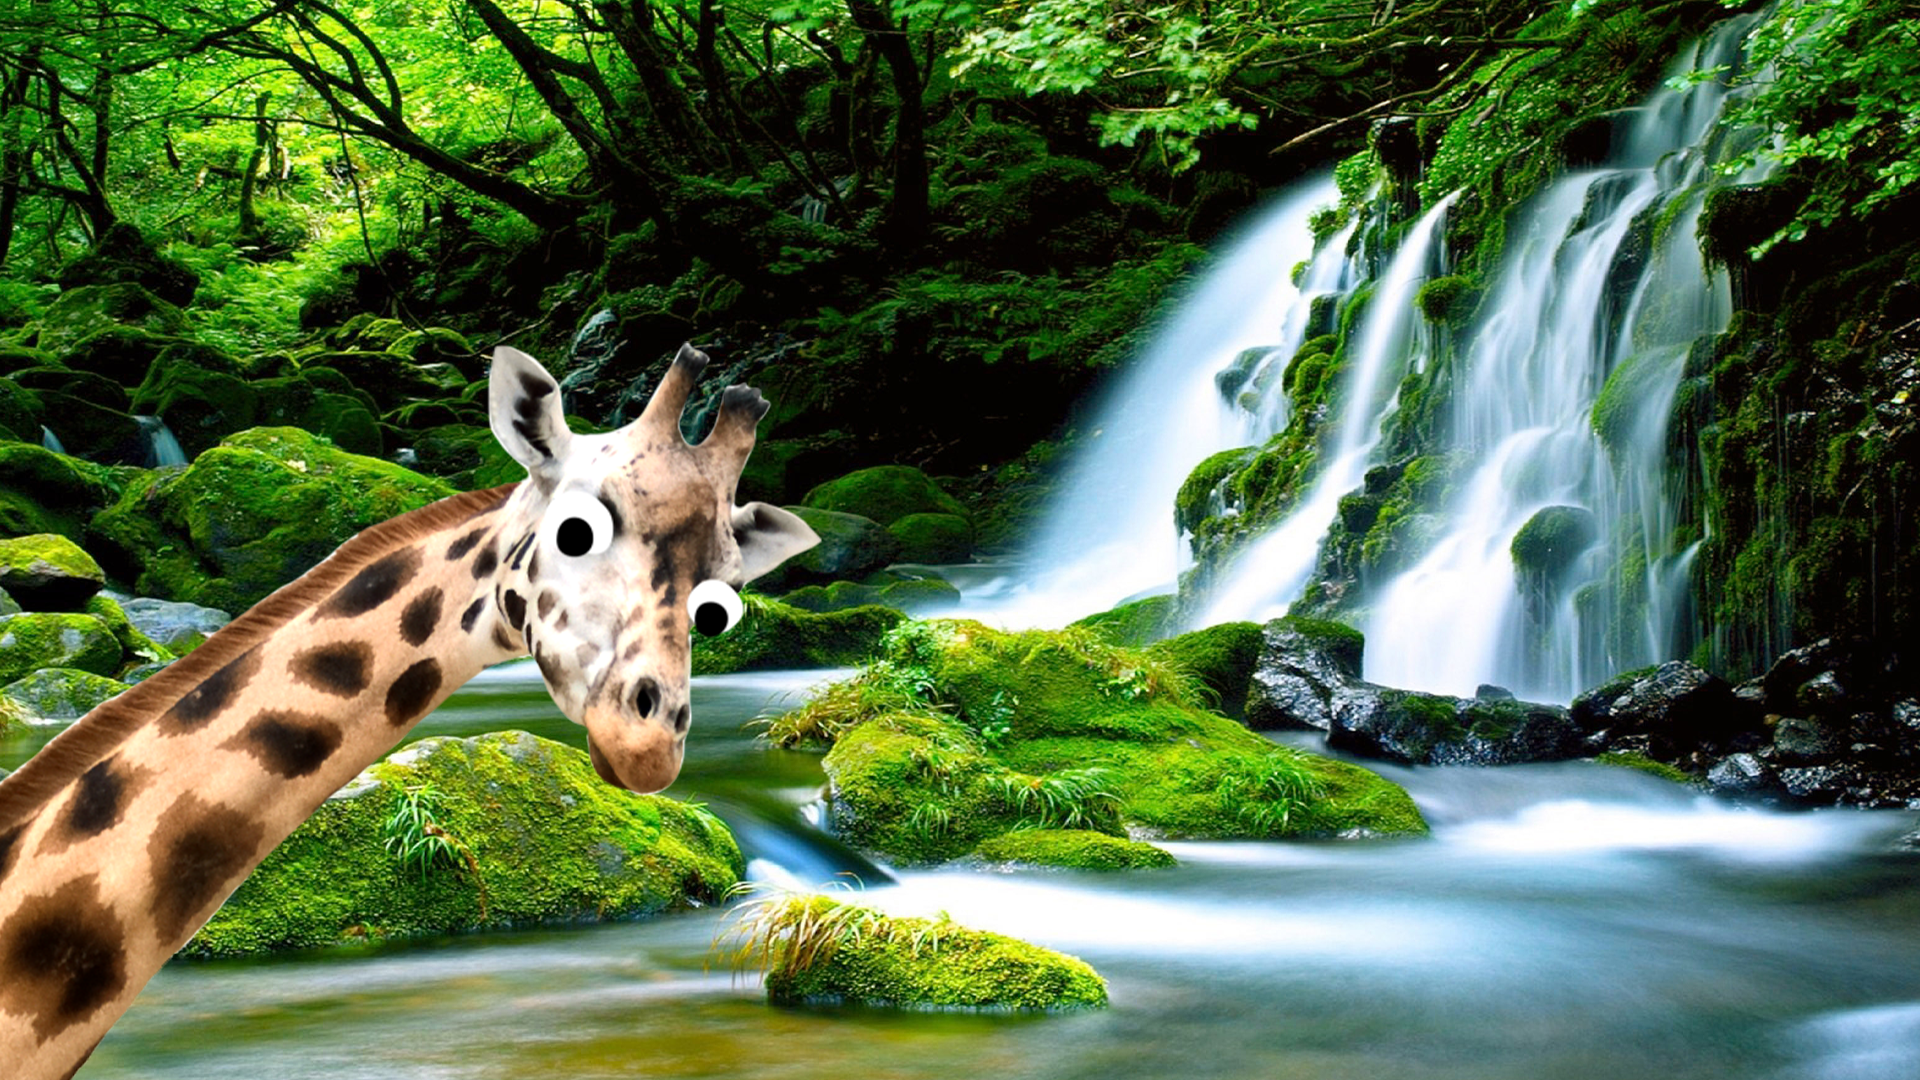 Giraffe and nice waterfall